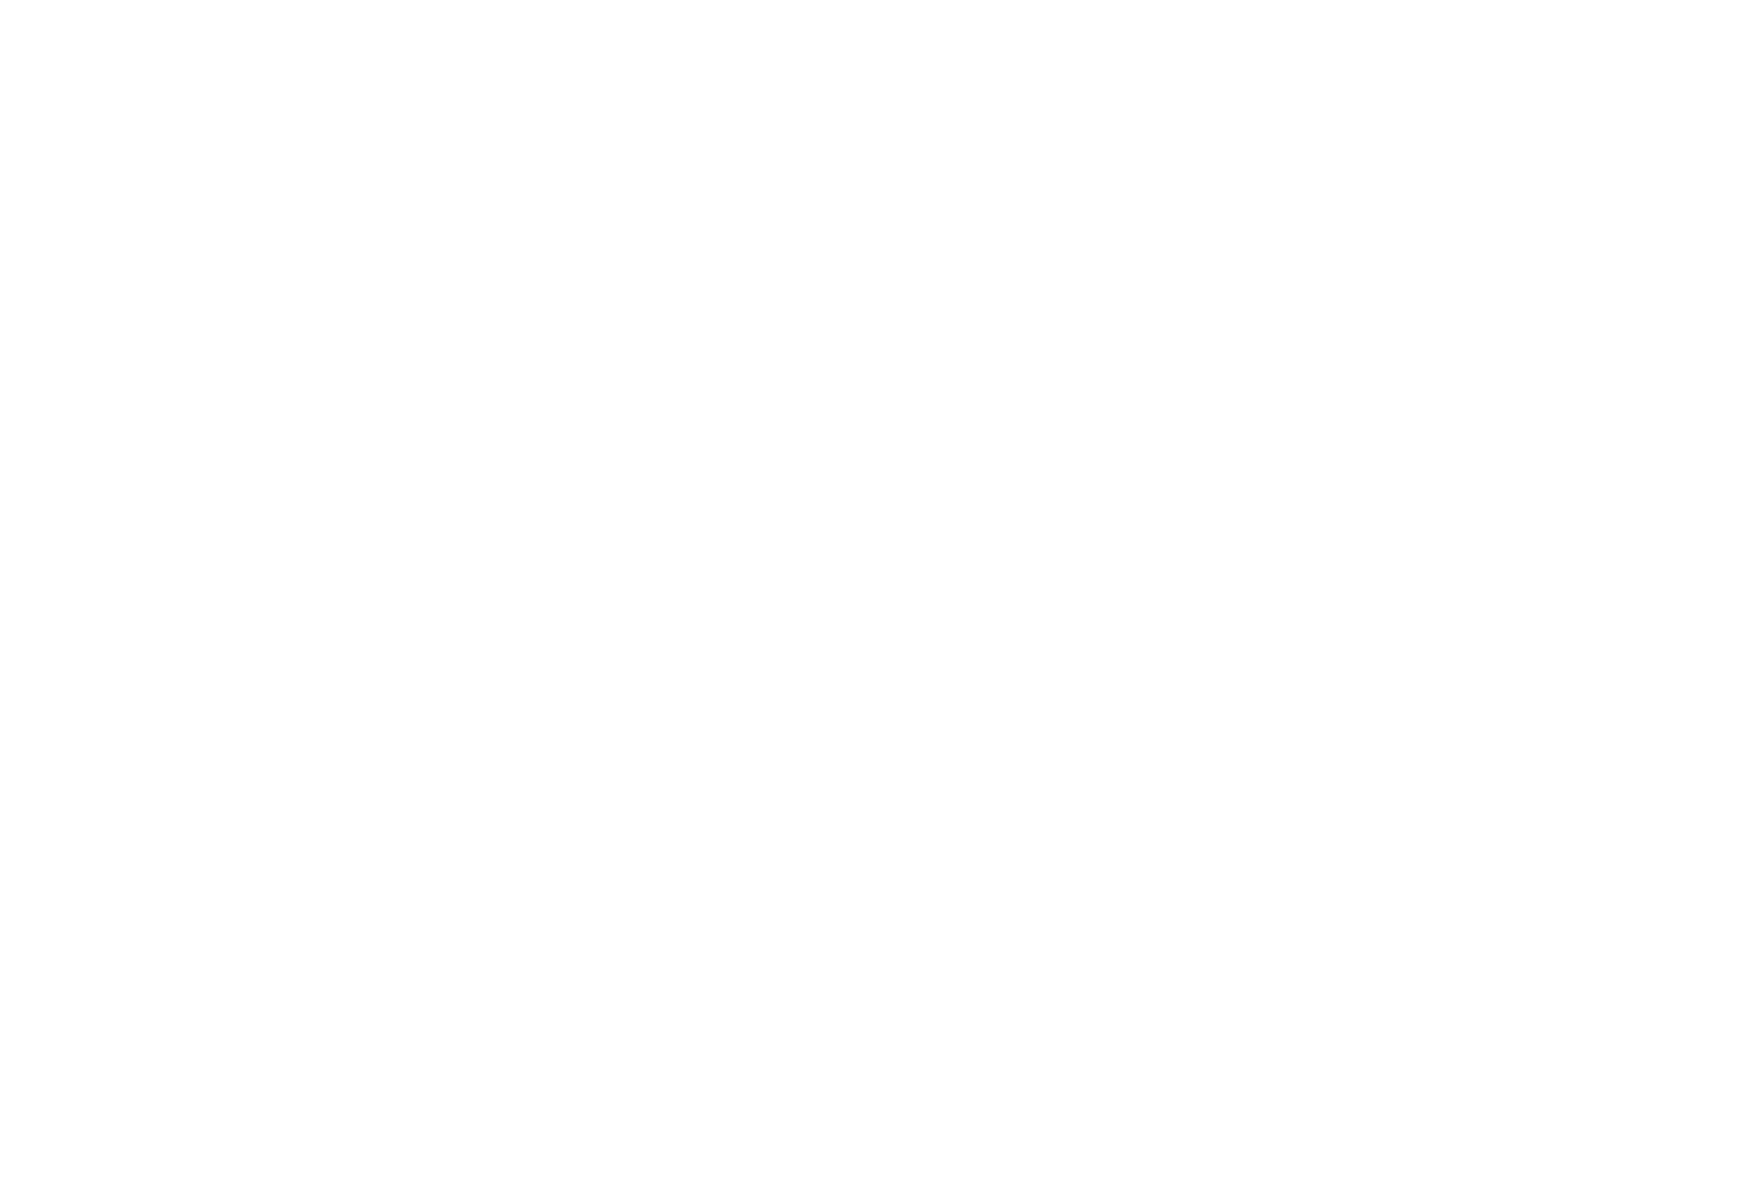 Hillrock